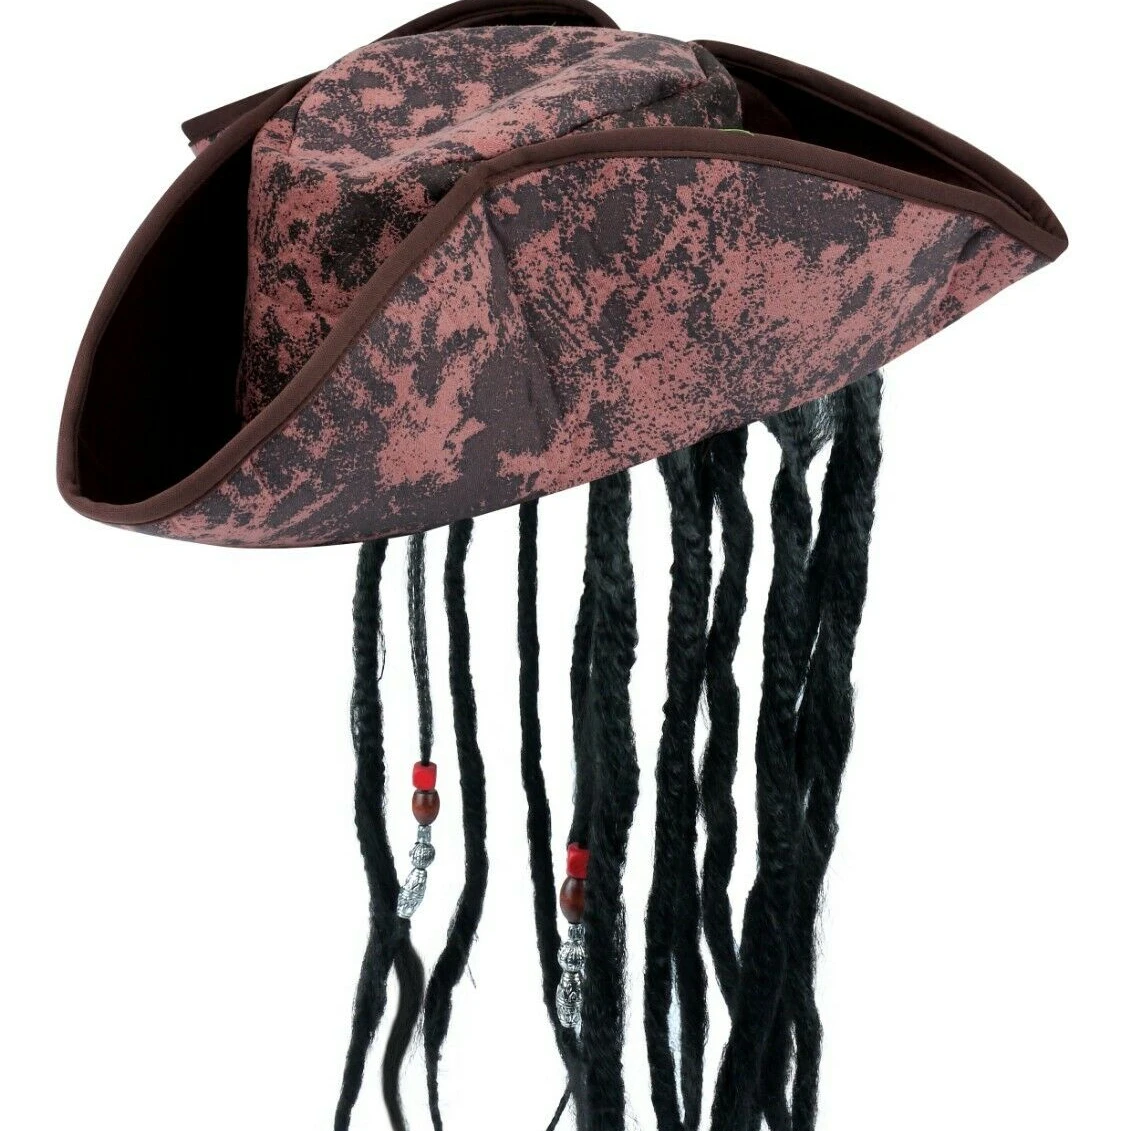 Caribbean Jack Sparrow Pirate Fancy Dress Hat With dreadlocks Hair & Beads 